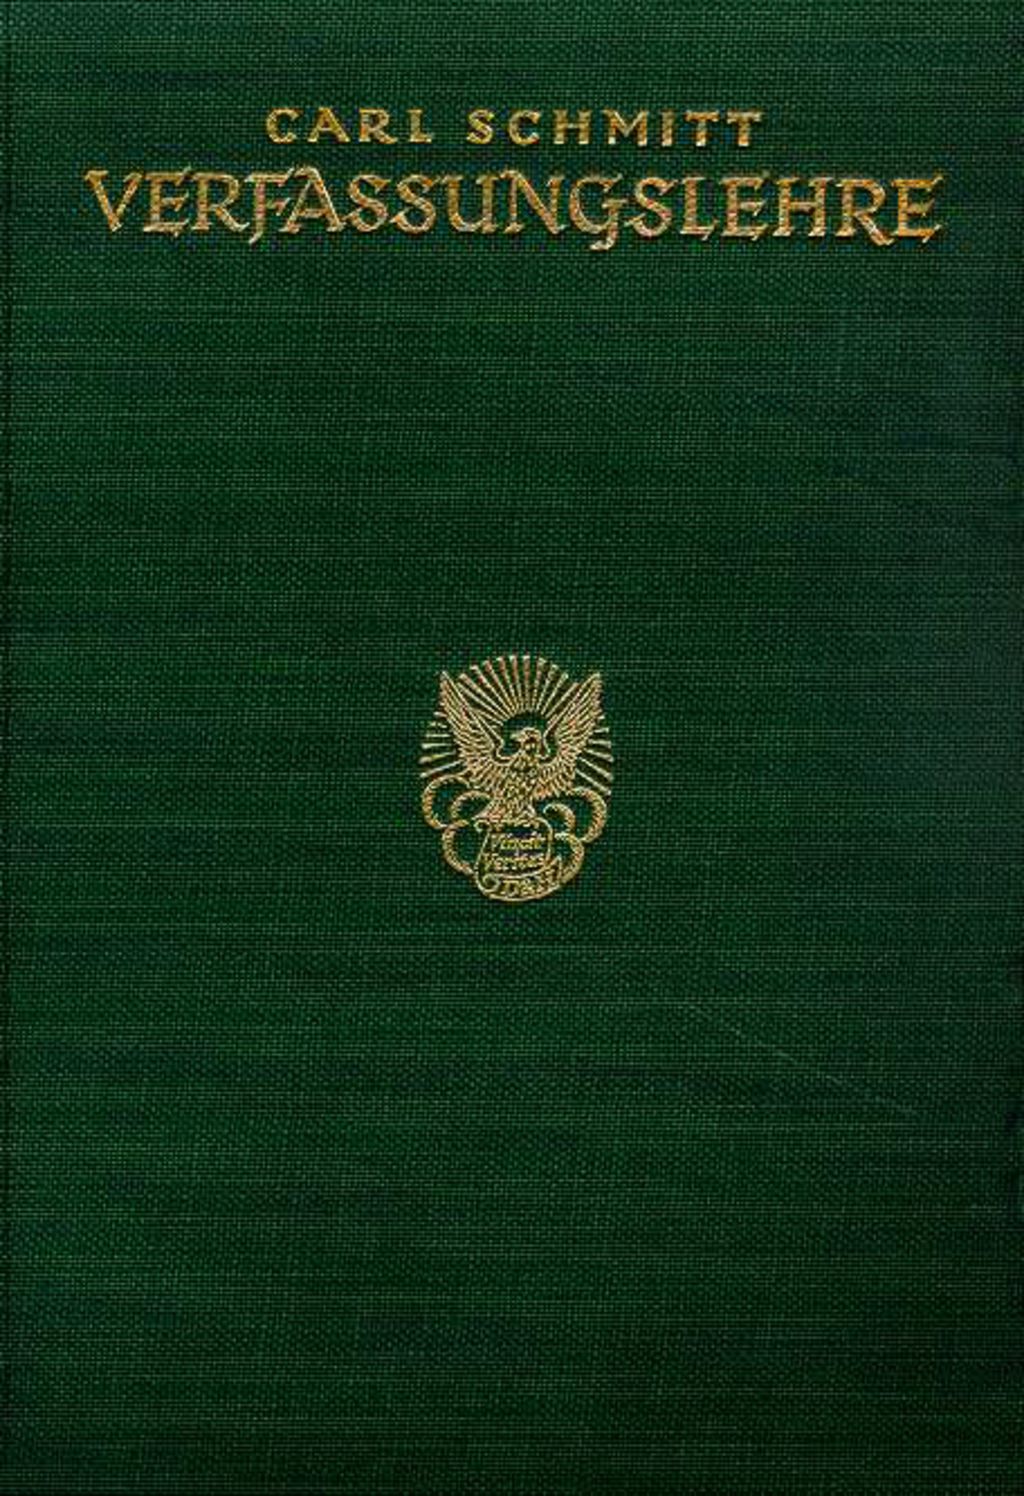 Exponat: Buch: Schmitt, Carl "Verfassungslehre", 1928